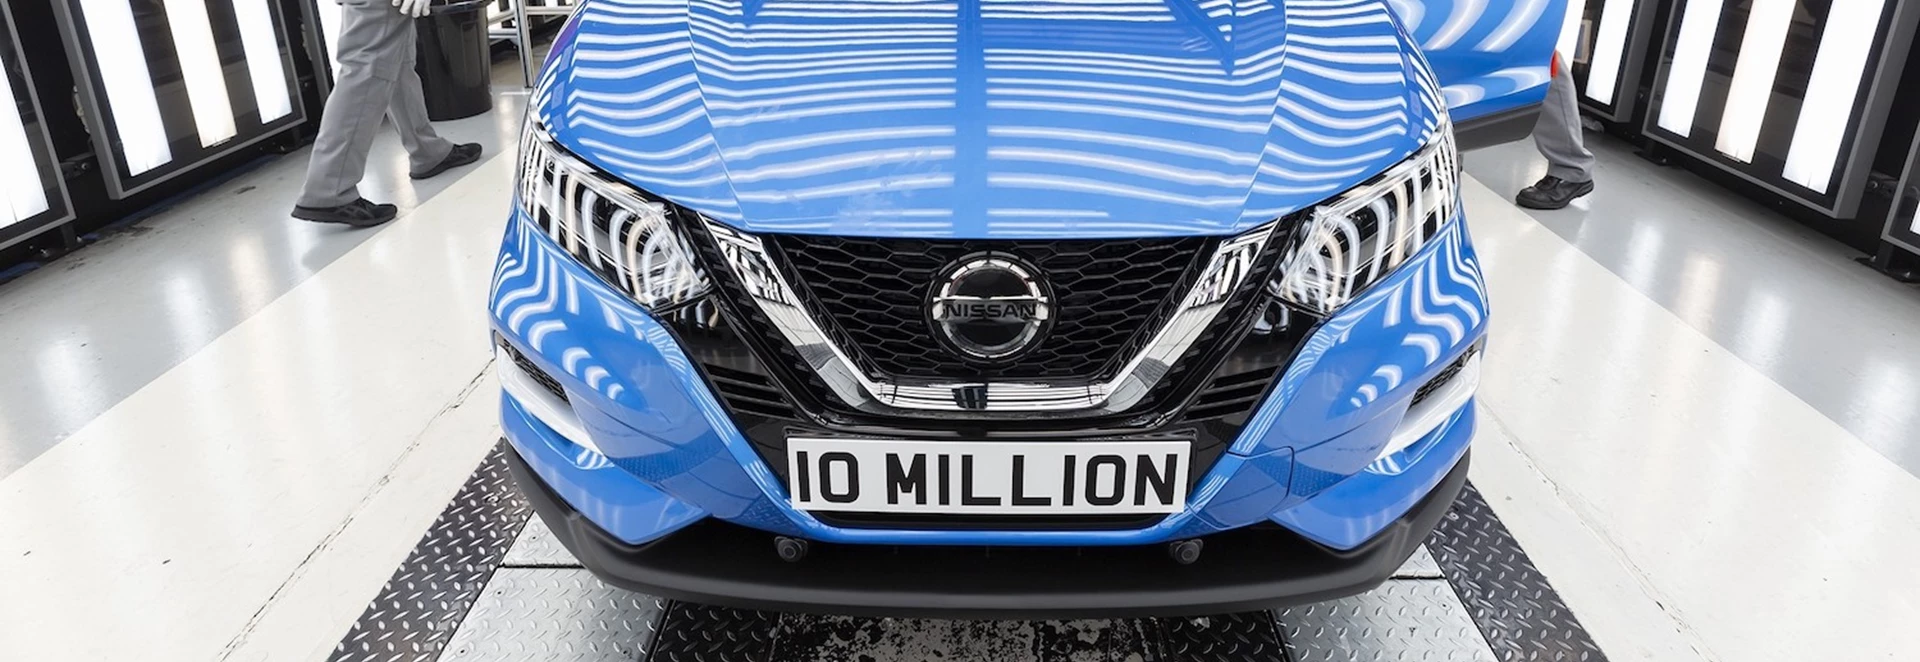 Nissan builds 10 millionth vehicle at Sunderland plant